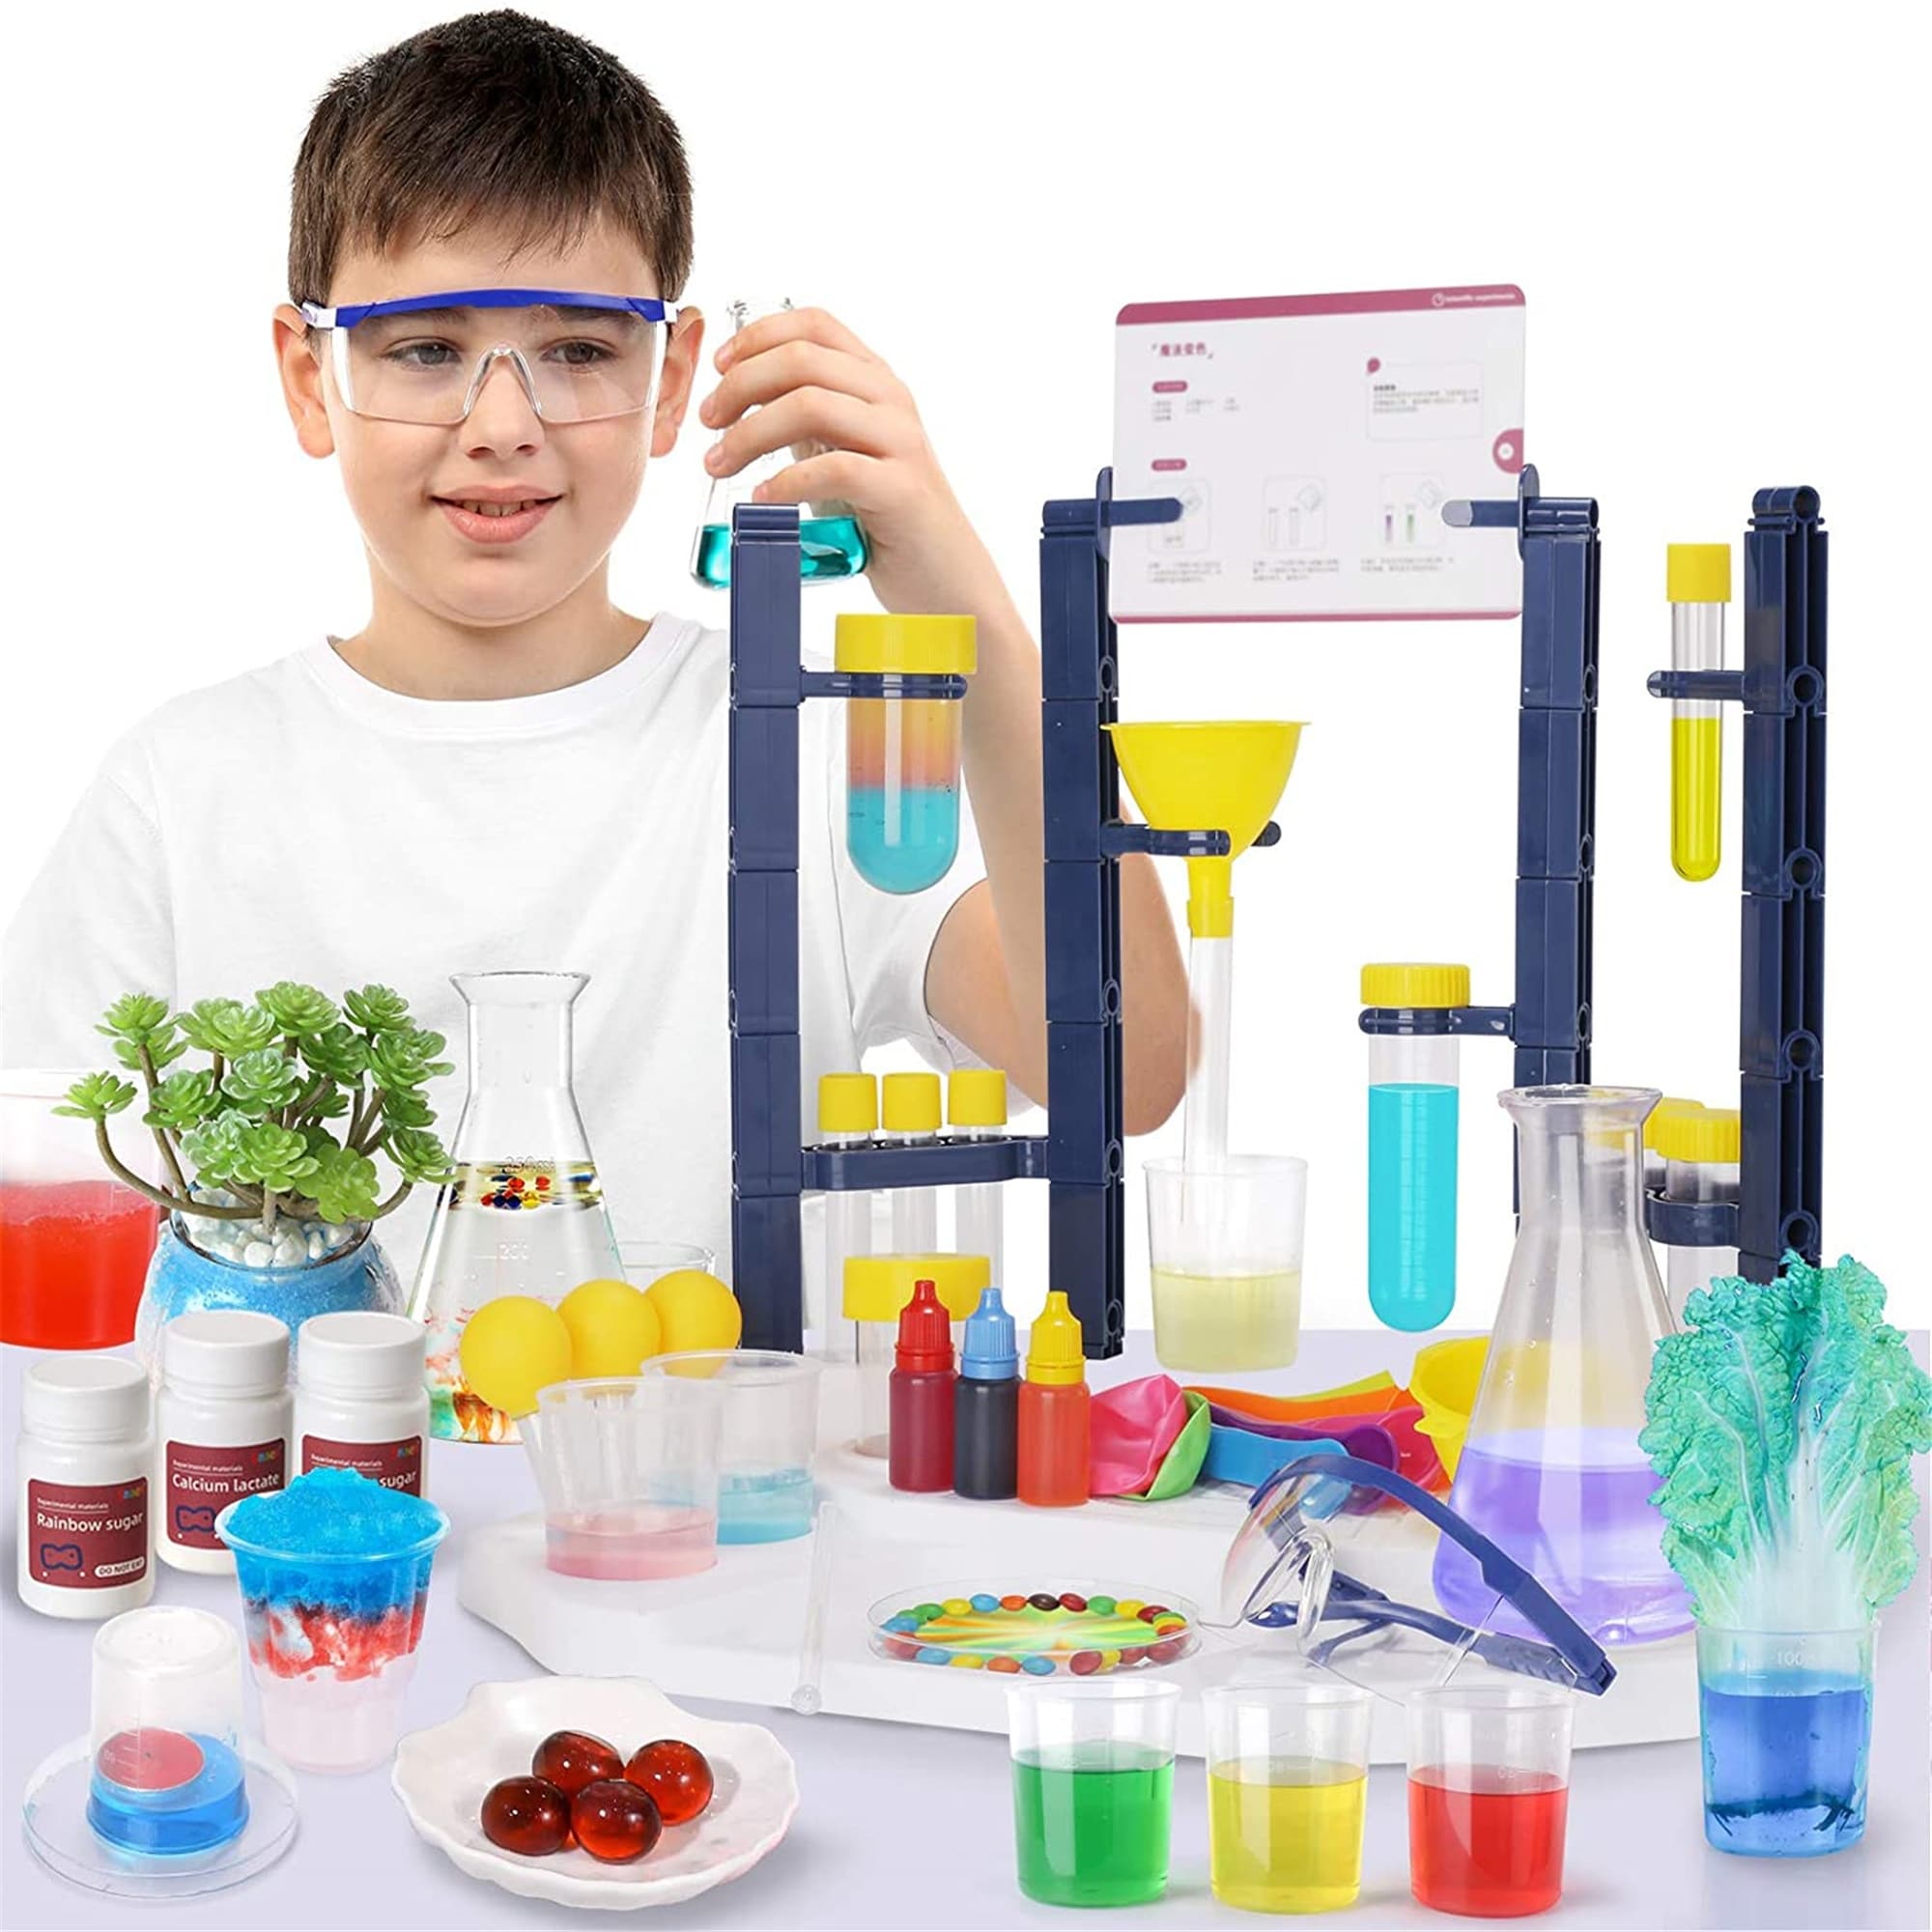 STEM Science Kits & Experiment Kits